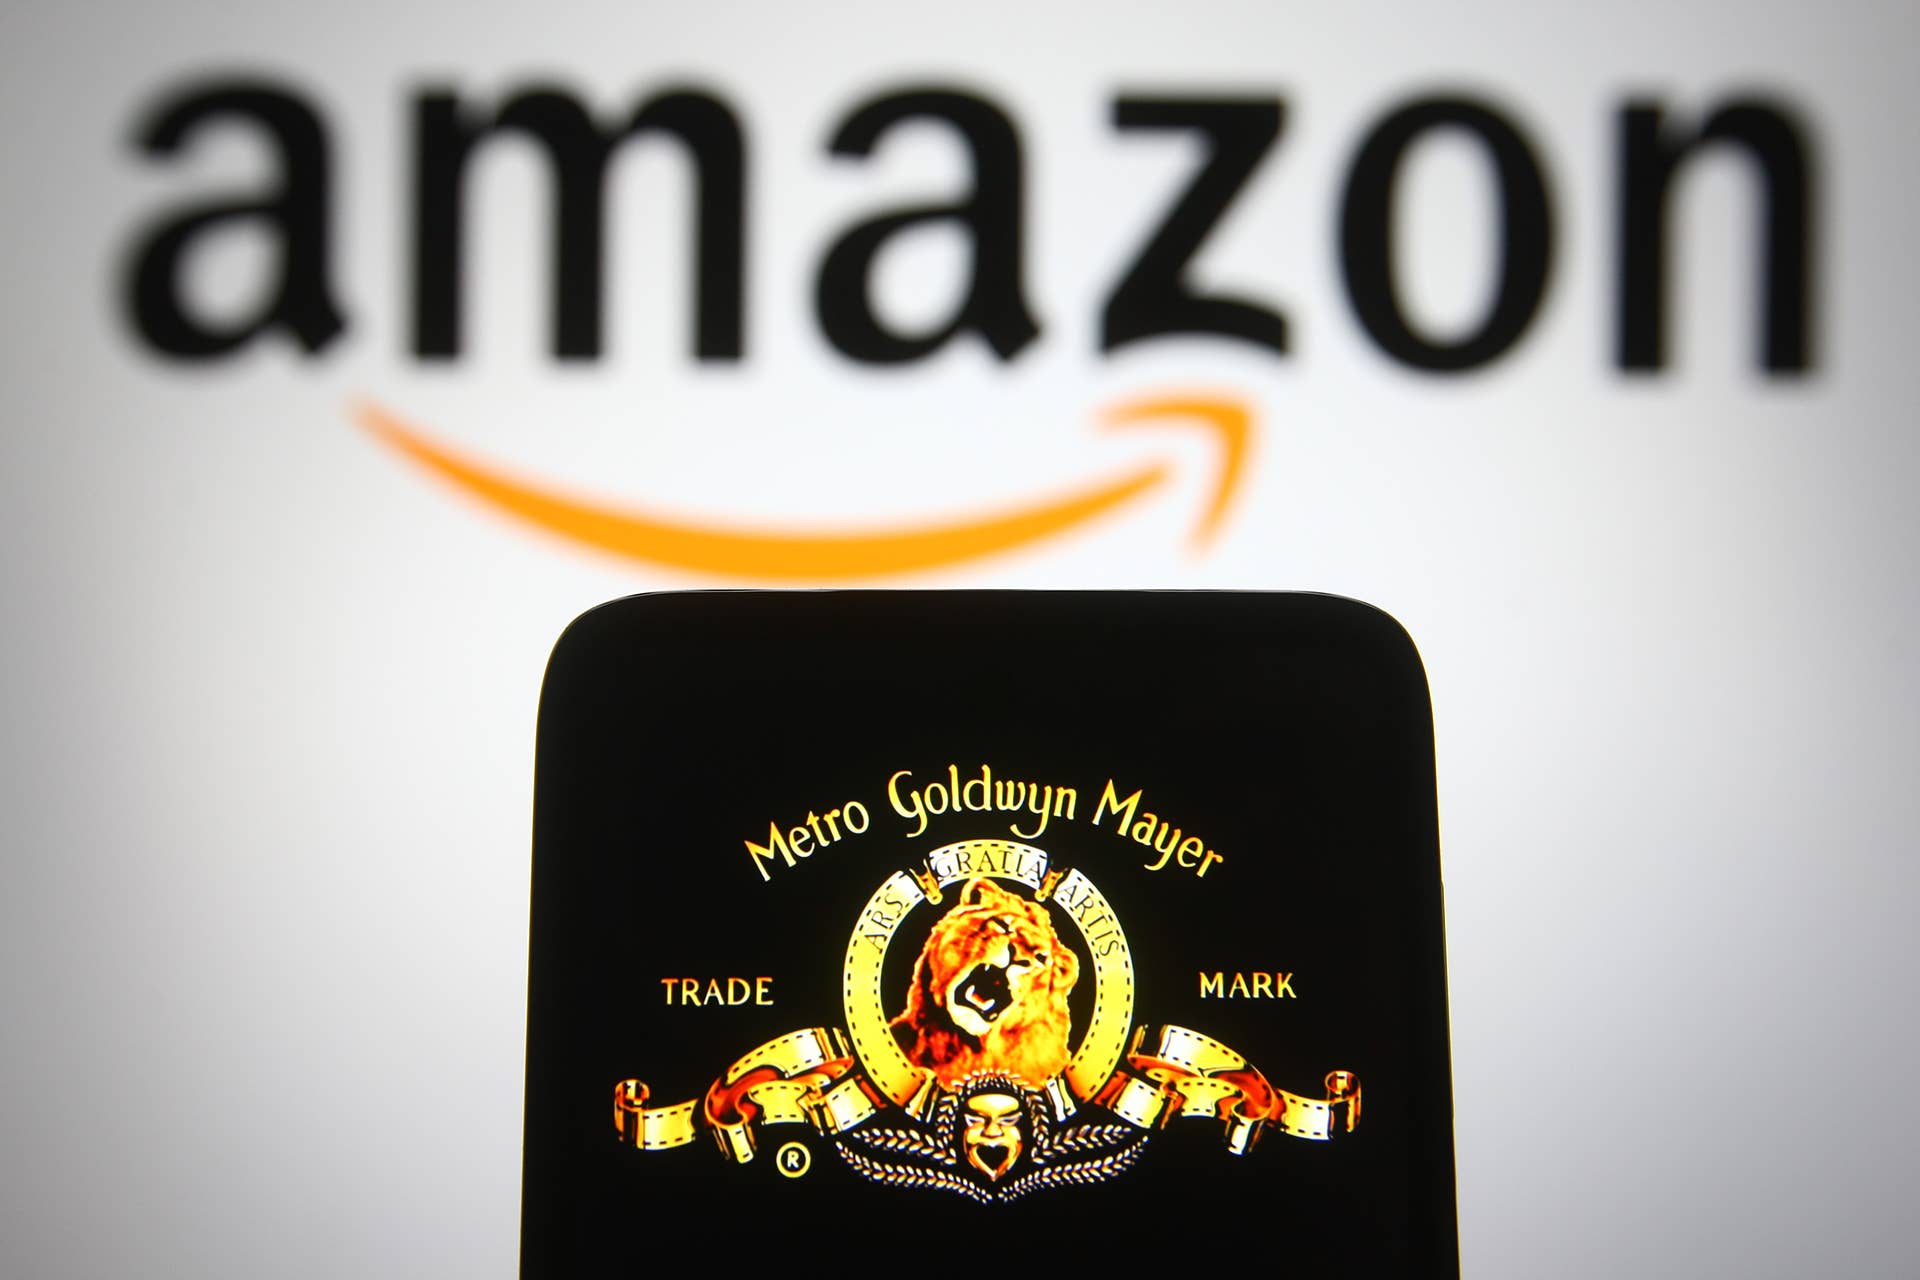 Amazon and MGM logos